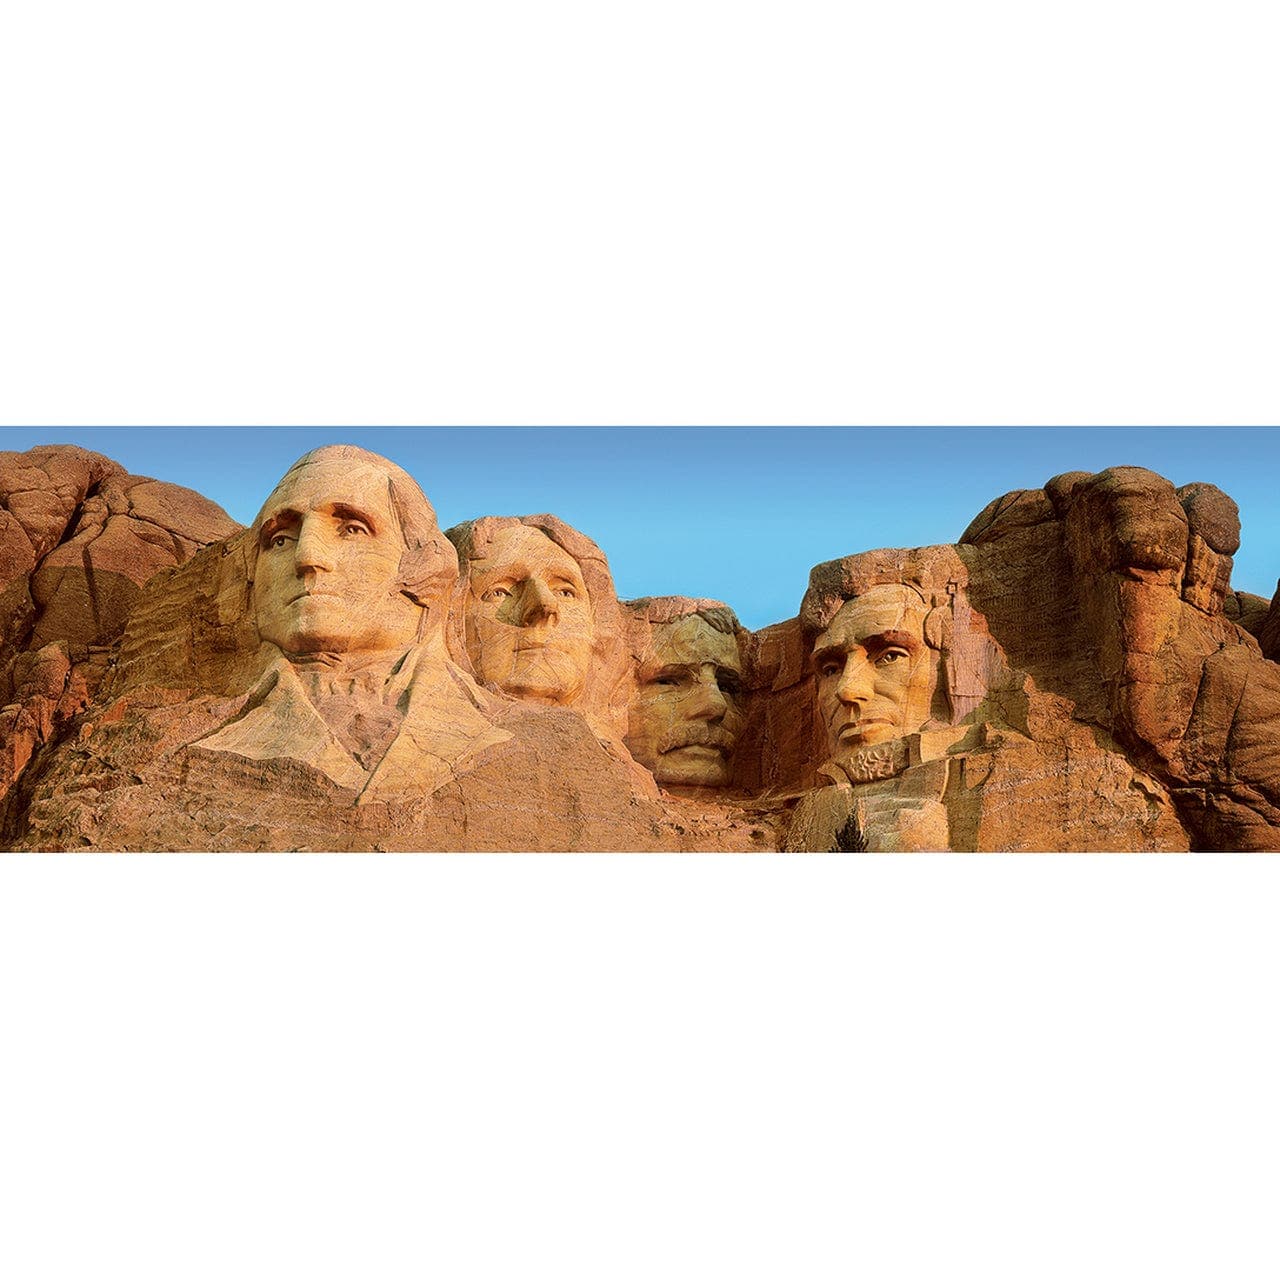 American Vistas - Mount Rushmore - 1000 Piece Panoramic Puzzle